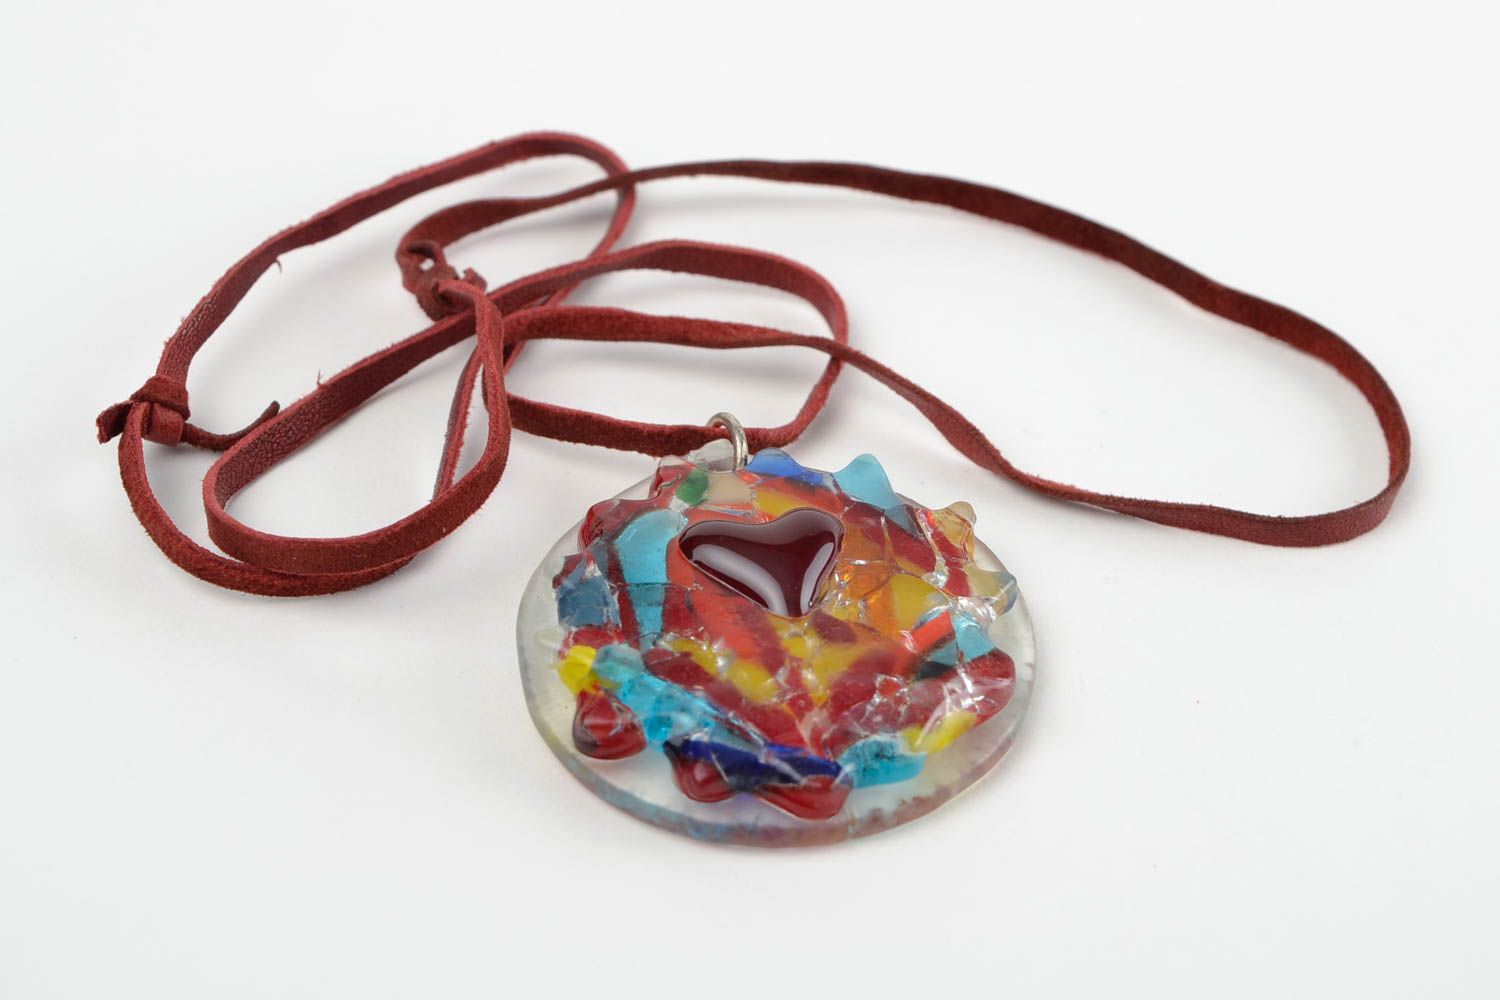 Handmade pendant designer pendant unusual jewelry glass pendant gift ideas photo 5